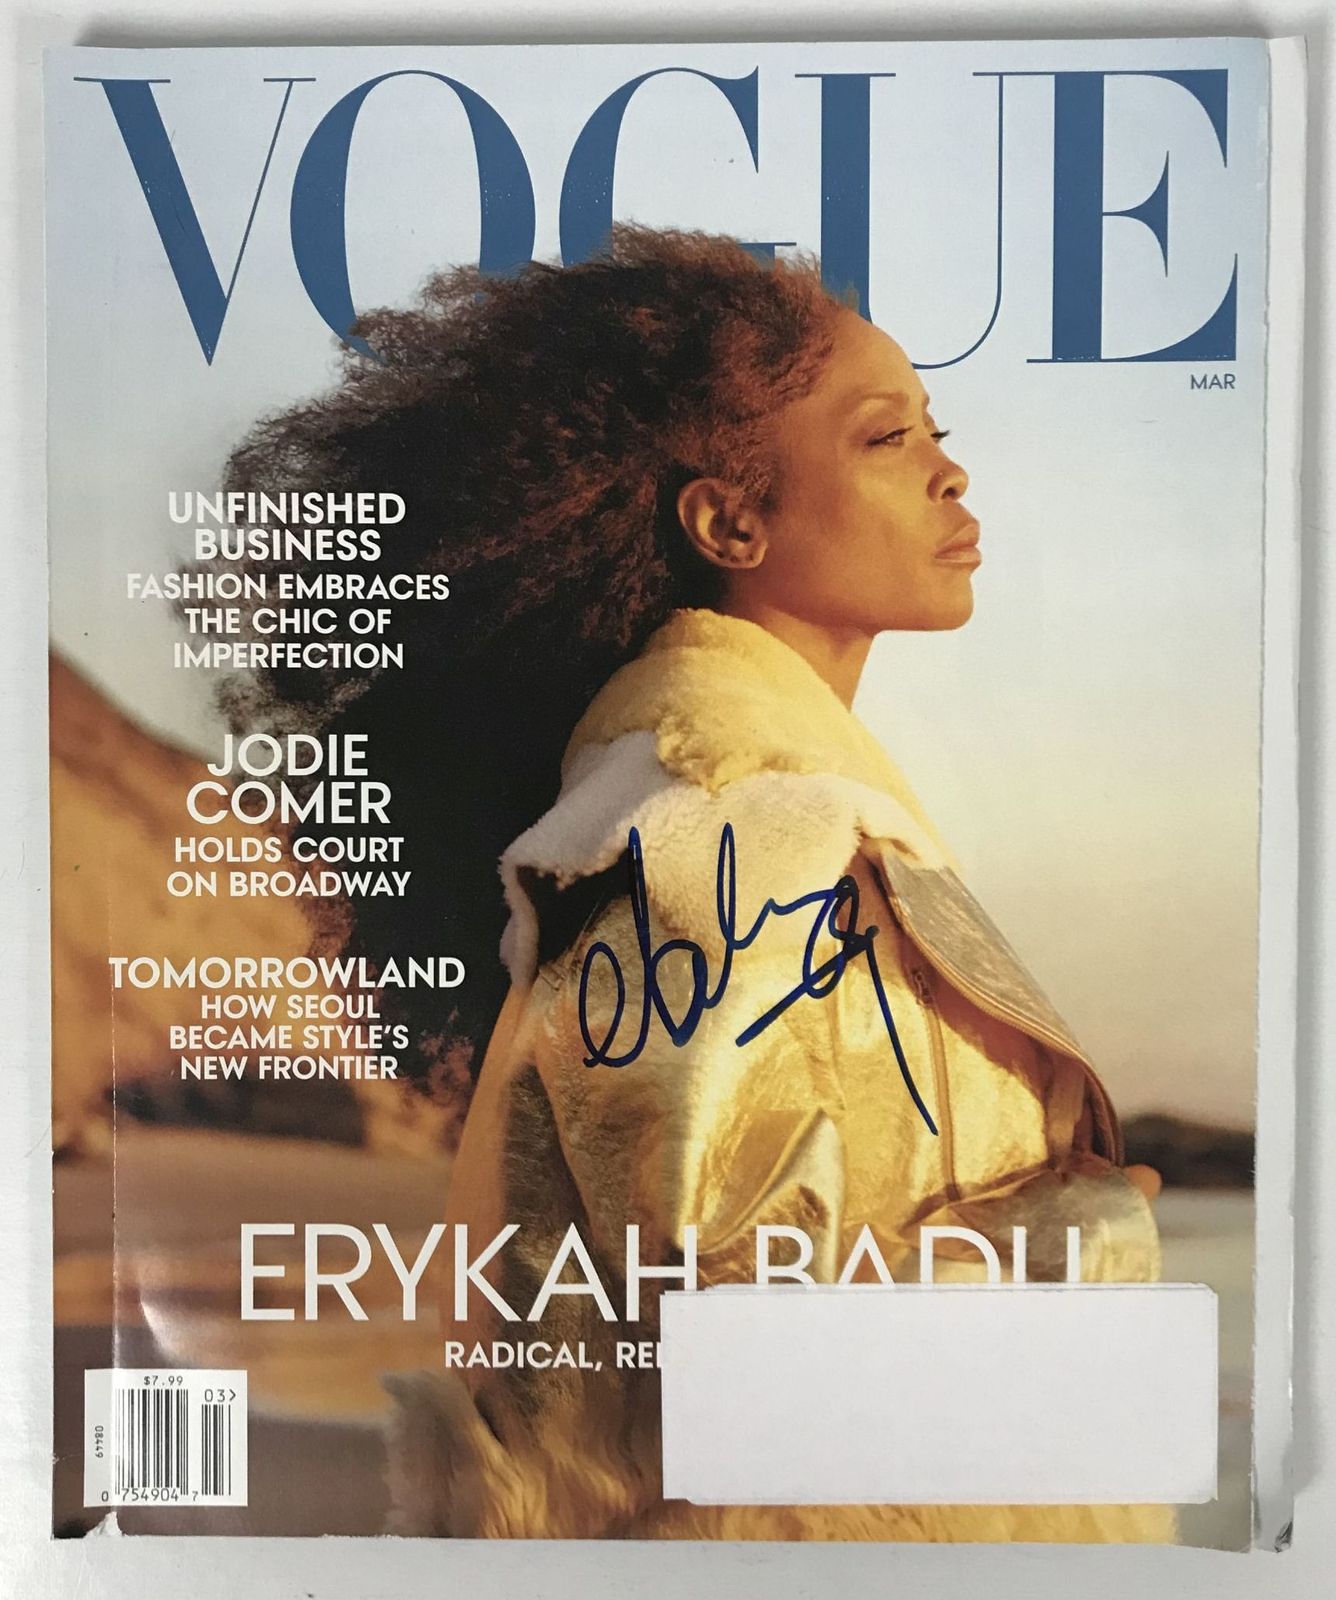 Primary image for Erykah Badu Signed Autographed Complete "Vogue" Magazine